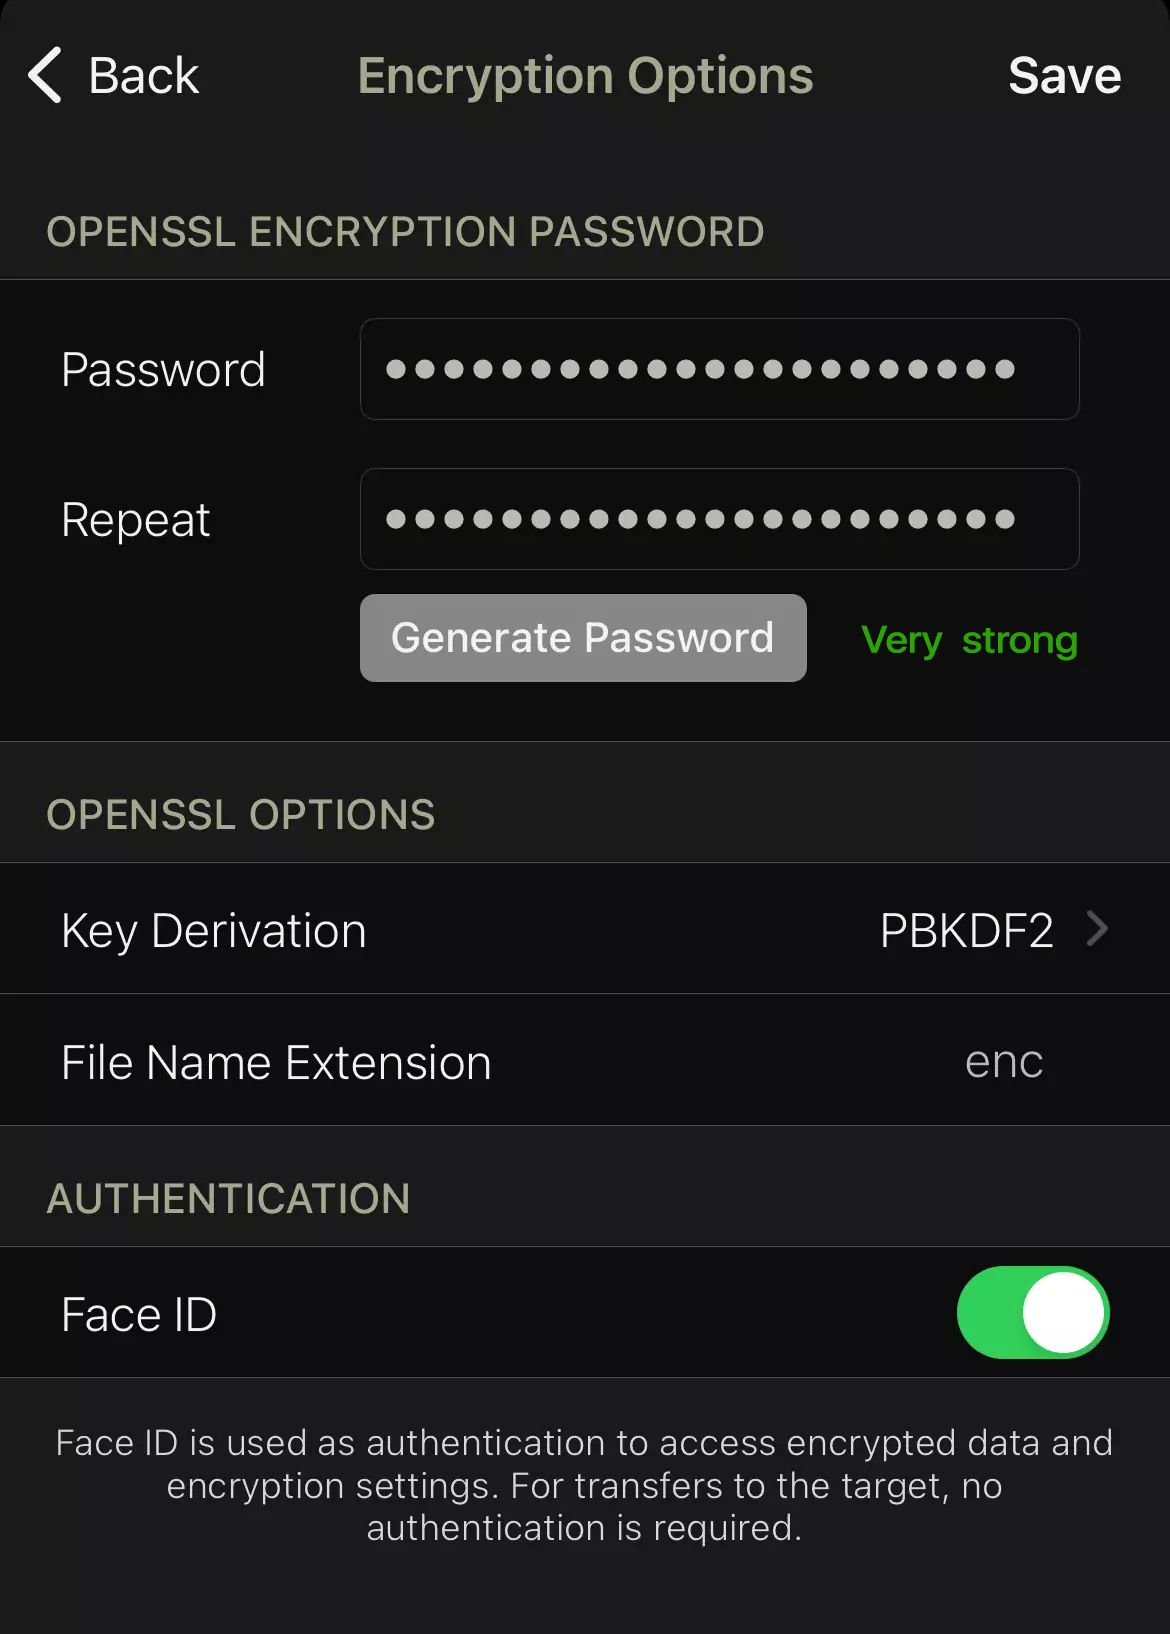 OpenSSL encryption options